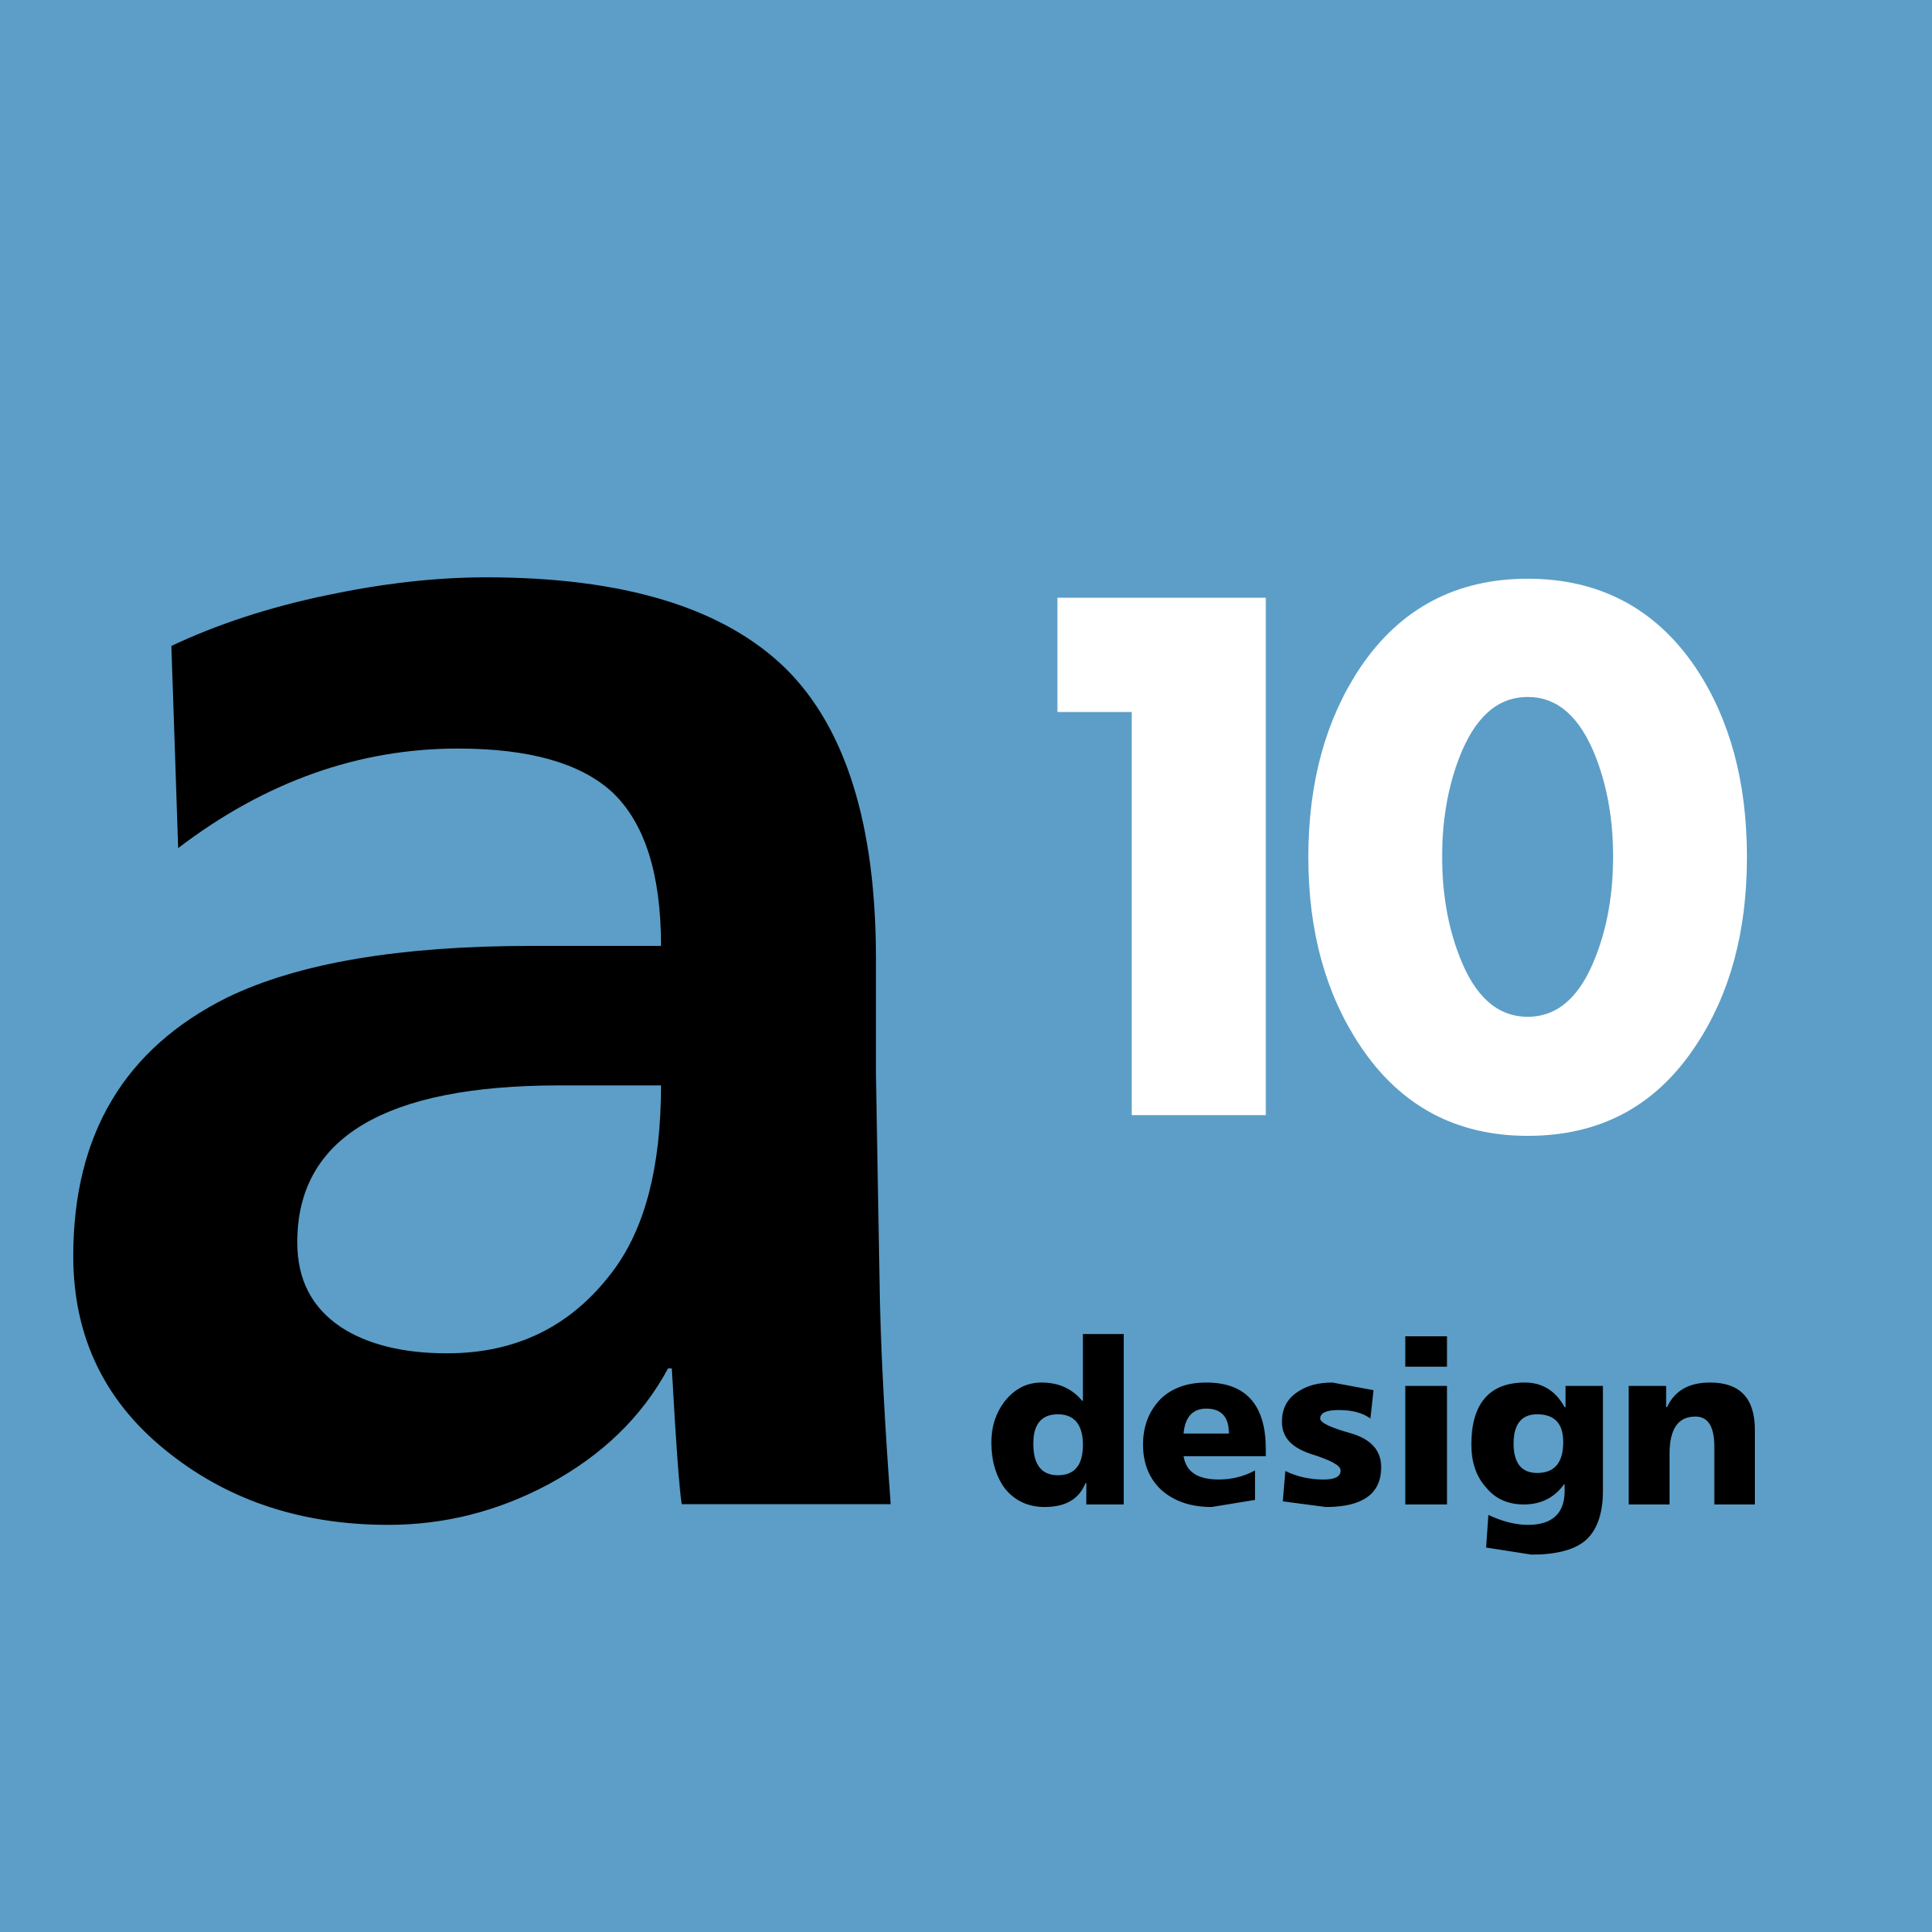 A10 Logo - A10 design Logo PNG Transparent & SVG Vector - Freebie Supply